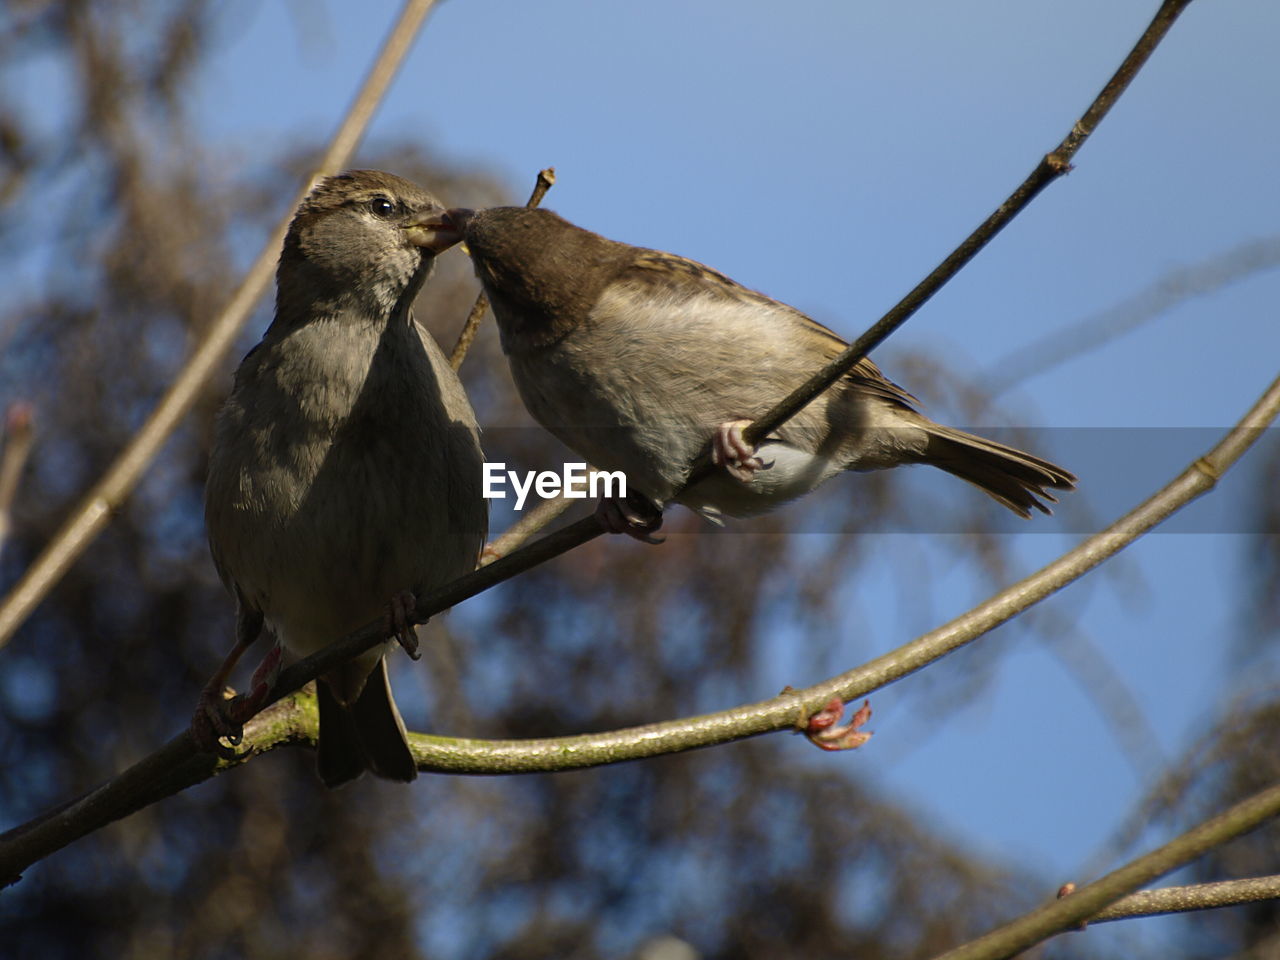 A female of house sparrow feeding a fledgling